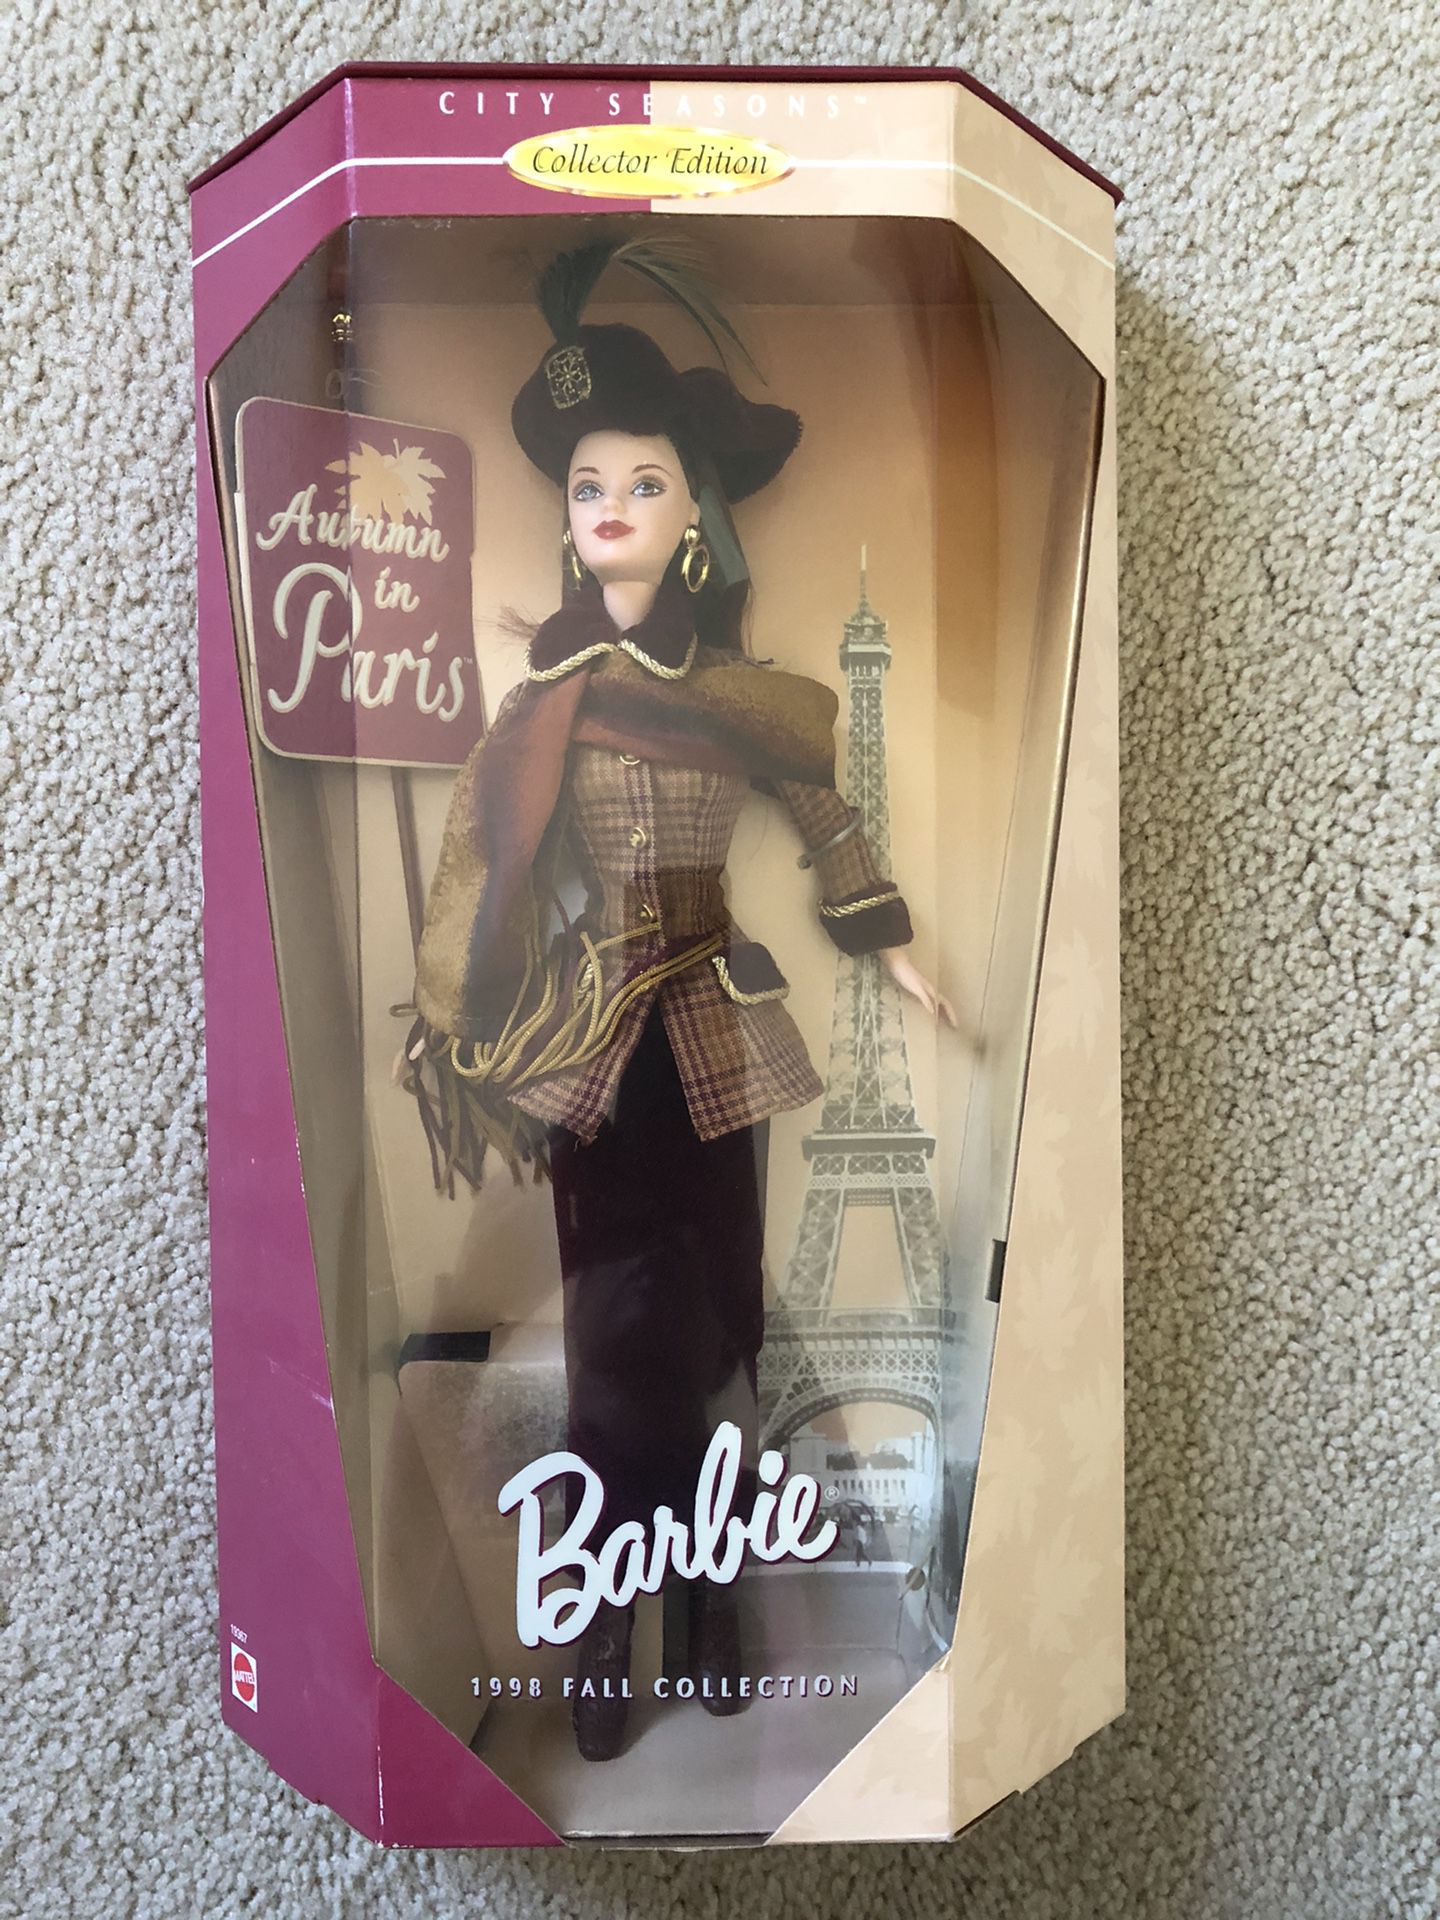 NEW in box 1998 Autumn in Paris collector’s Barbie